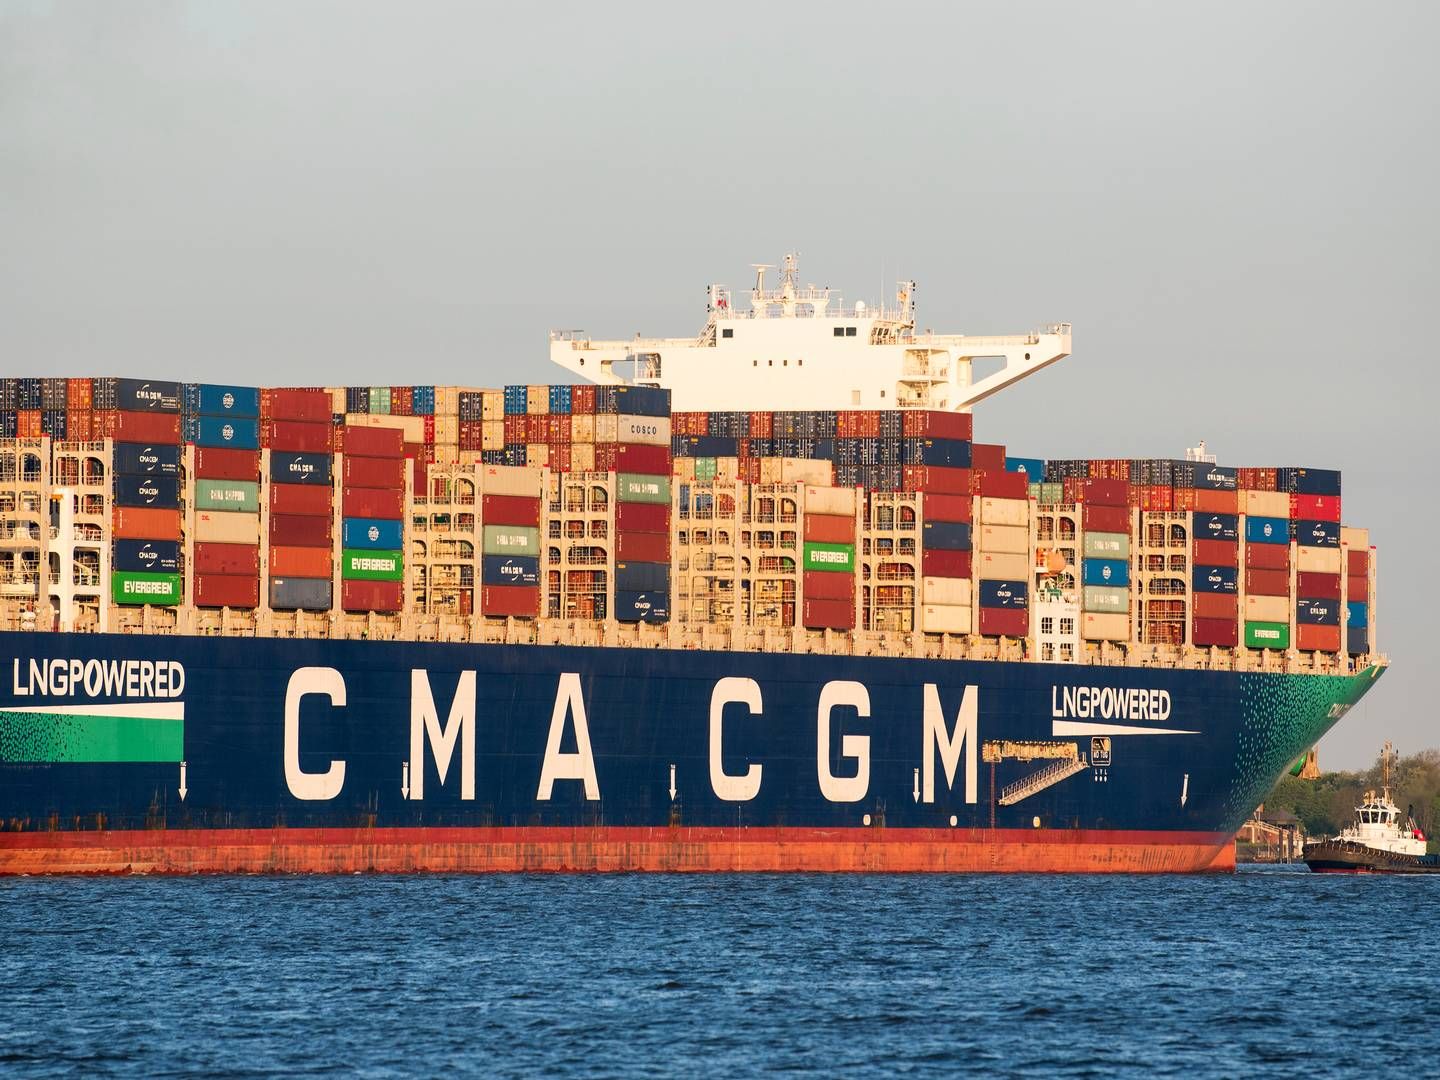 Et CMA CGM-containerskib forlader havneterminal - er ikke det aktuelle skib CMA CGM Tage.